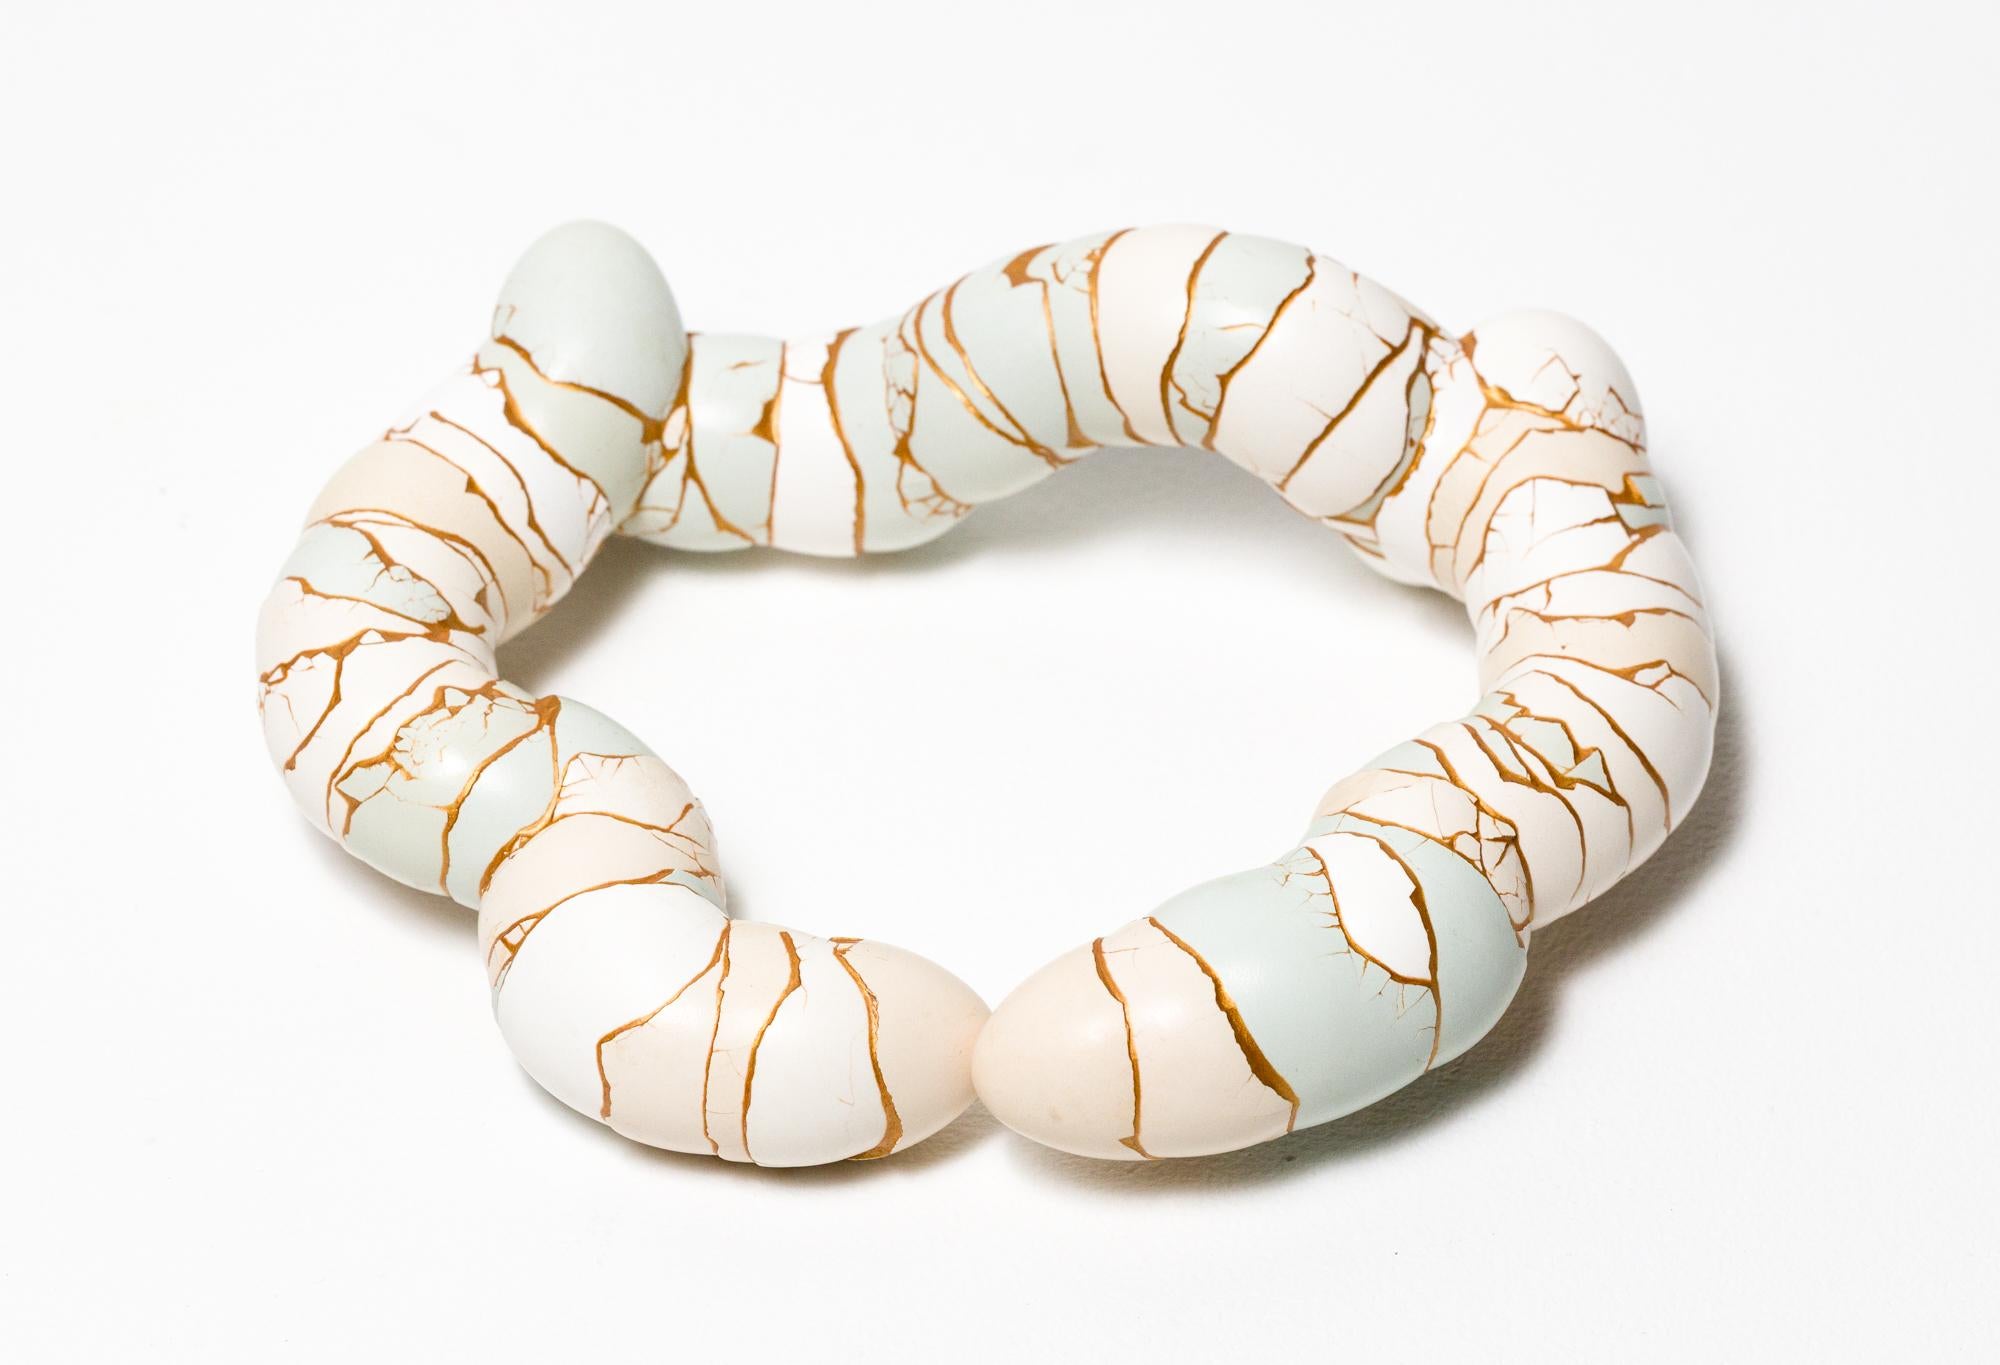 "Peck", reconstructed egg assembly - Sculpture by Katie VanVliet